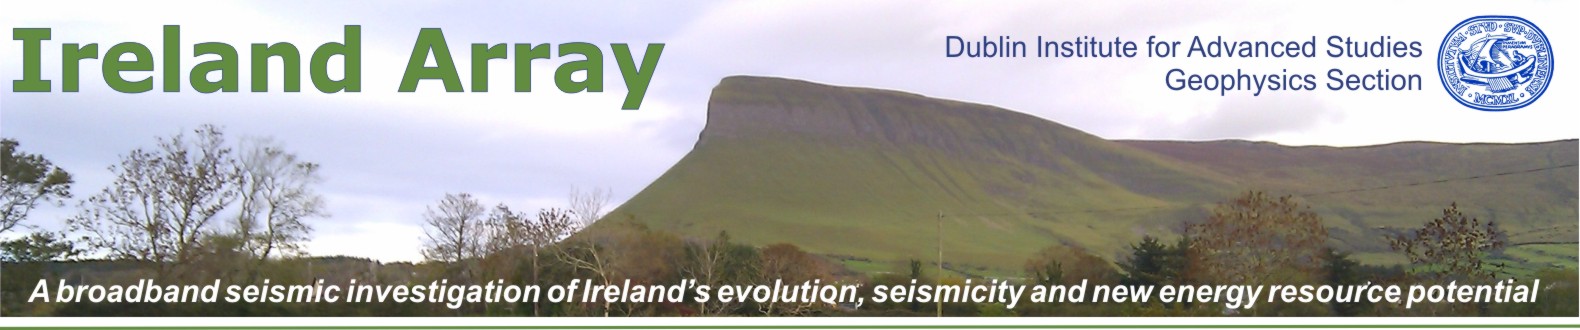 Ireland Array website image